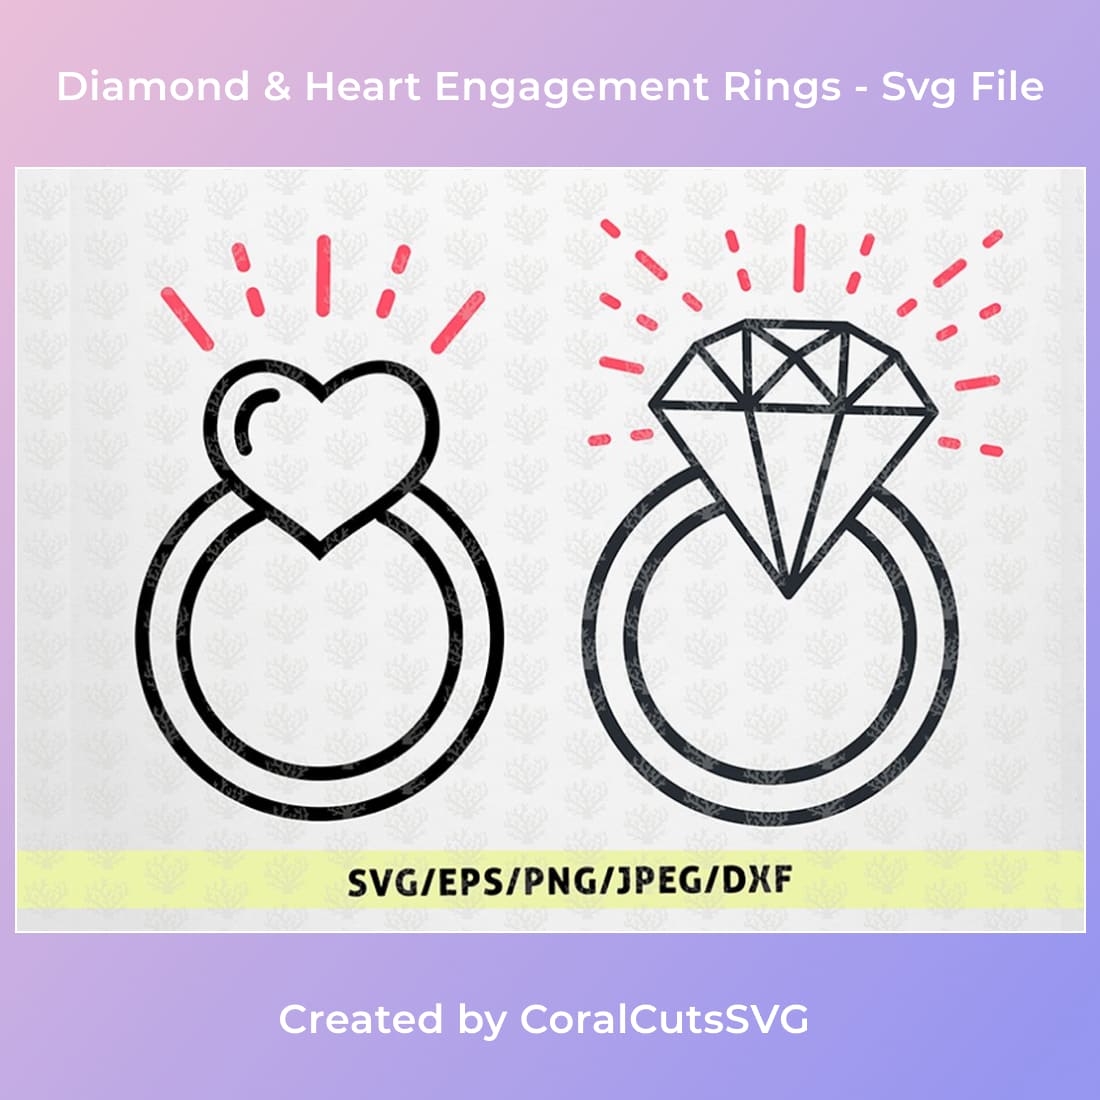 Diamond & Heart Engagement Rings - Svg File main cover.